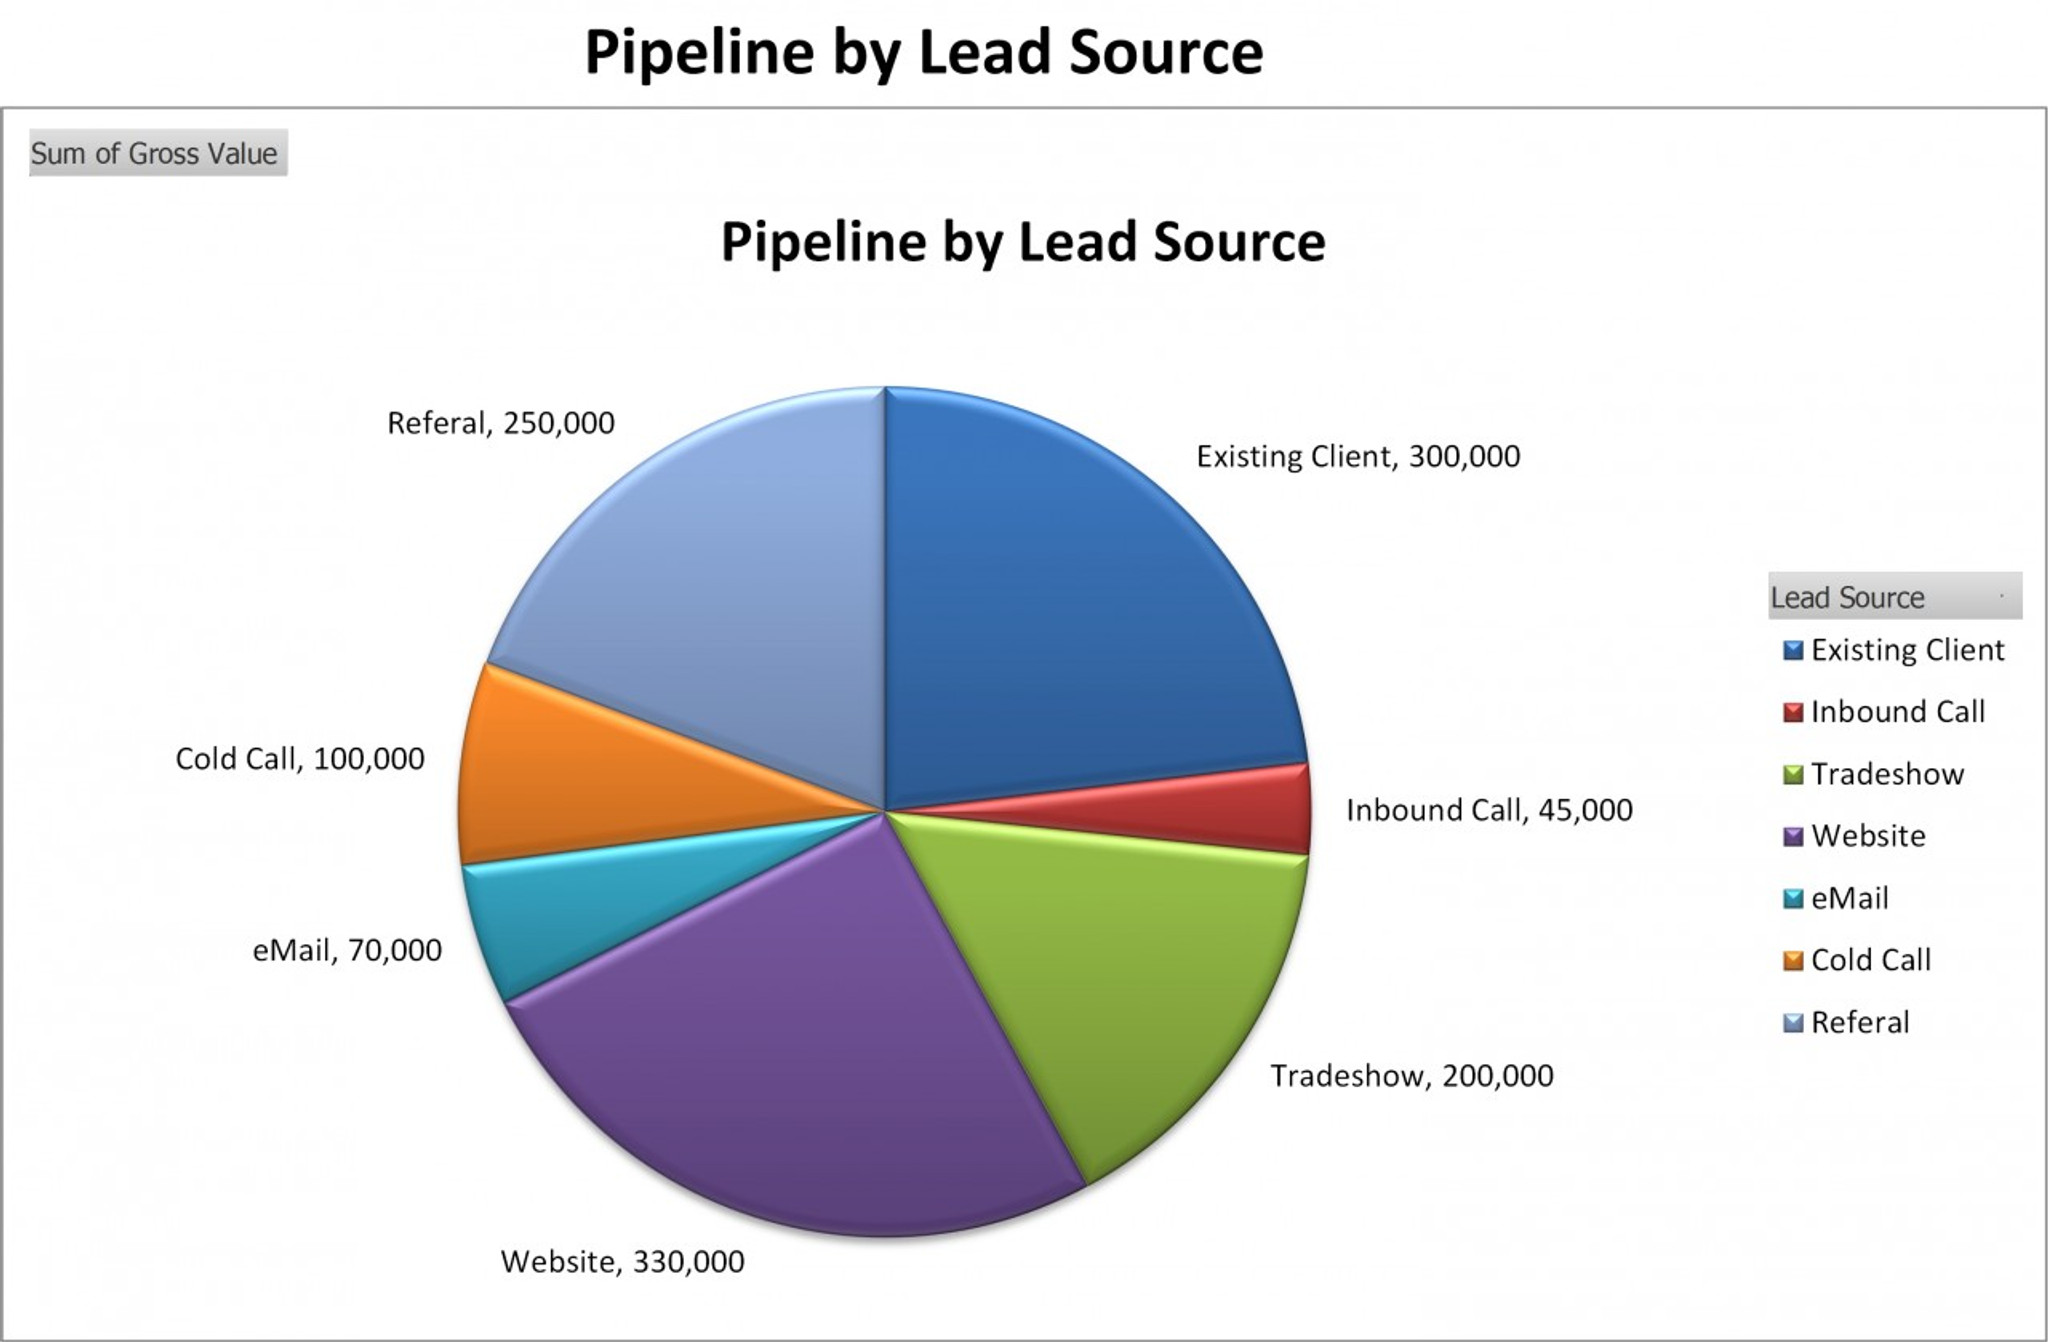 Exist client. Pipeline в excel. Пайплайн шаблон. Pipeline for sales. Пайплайн для клиента excel.